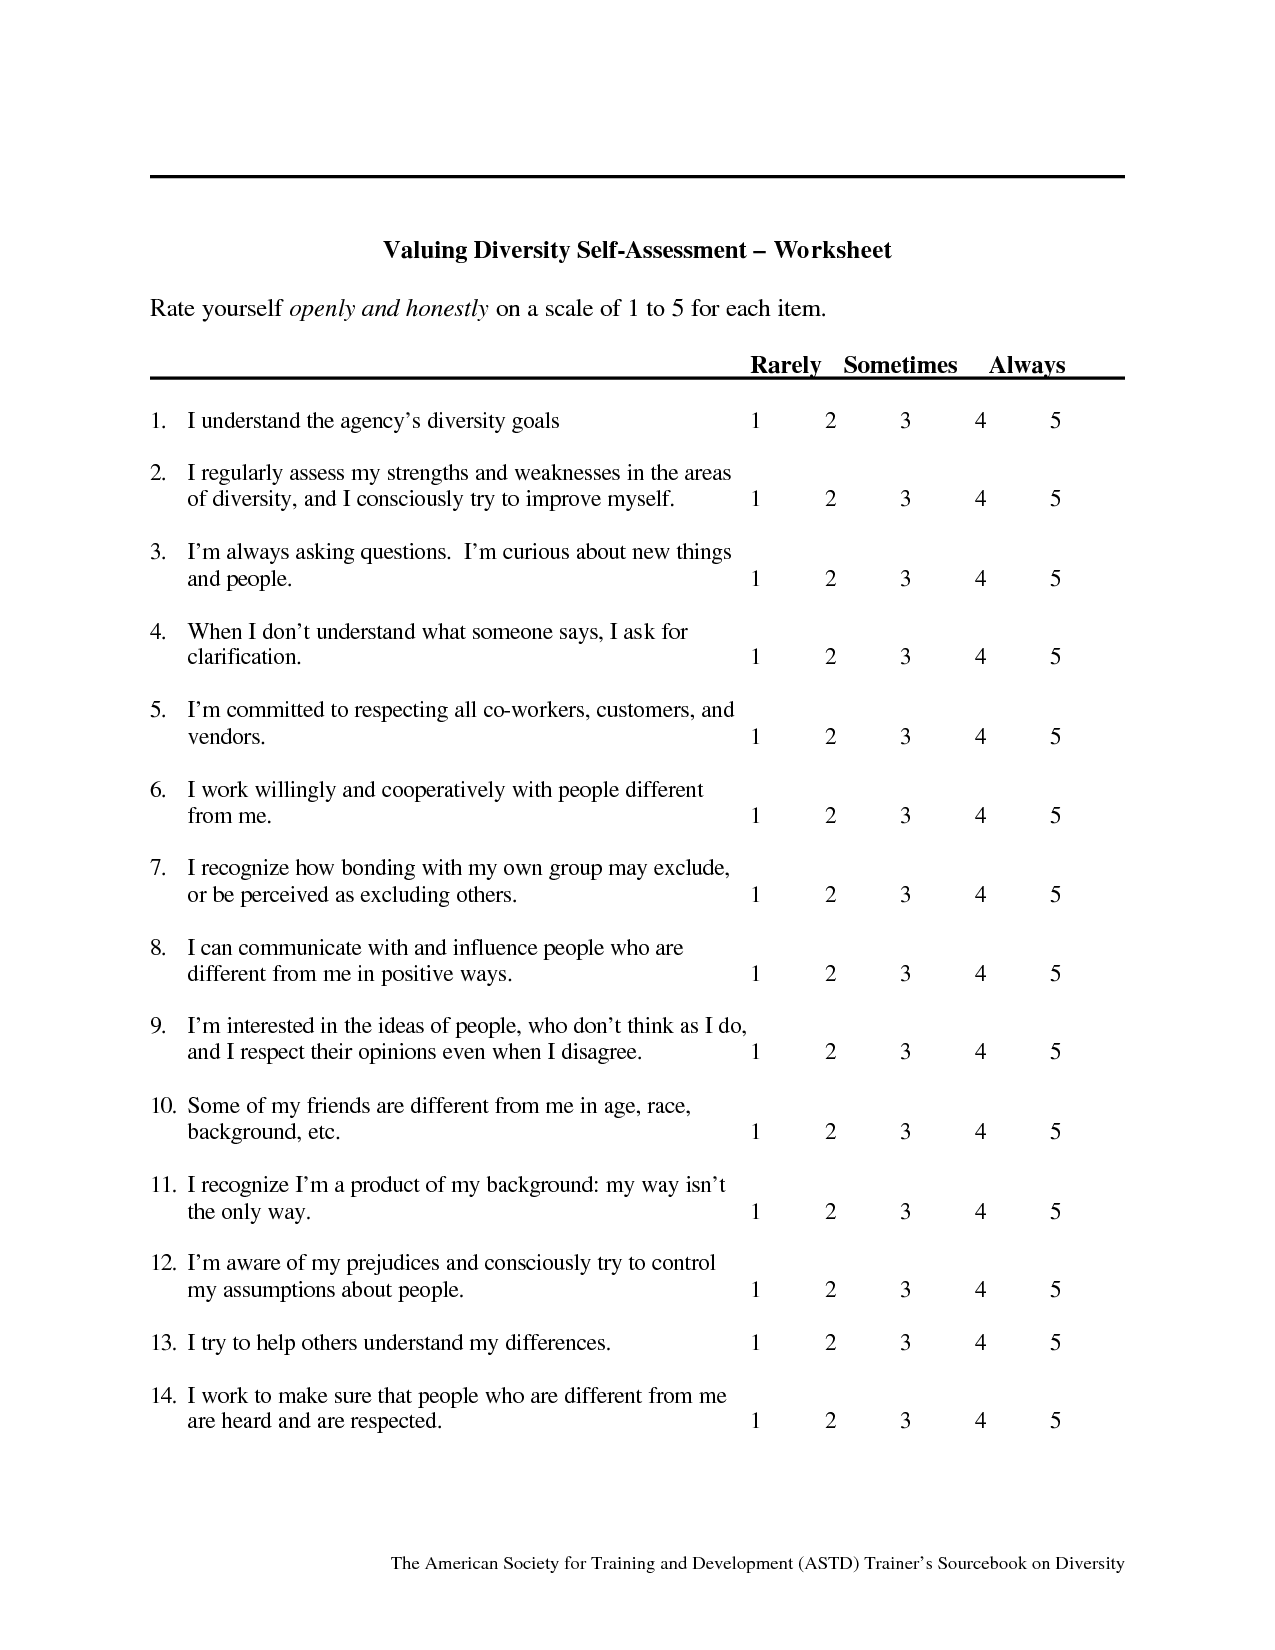 Personal Self-Assessment Worksheets Image